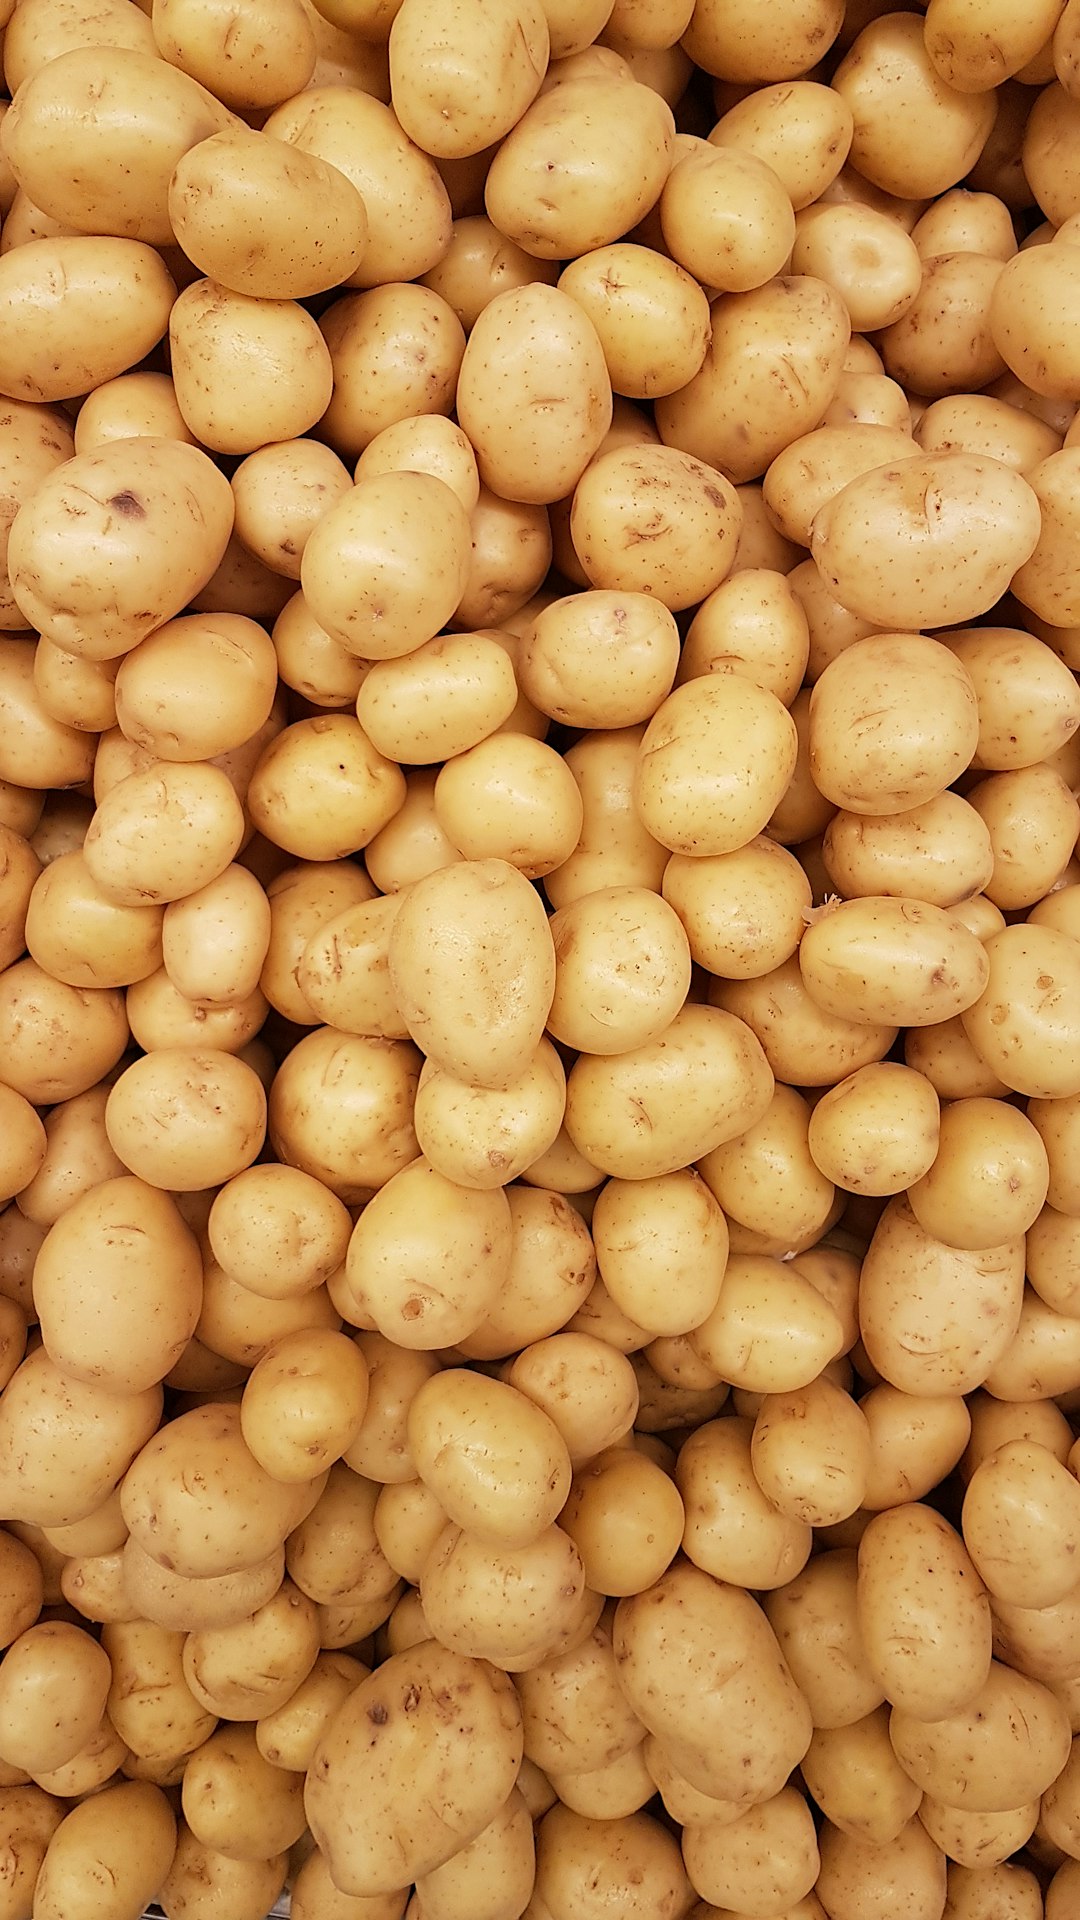 Garlic and Chive Mashed Potatoes